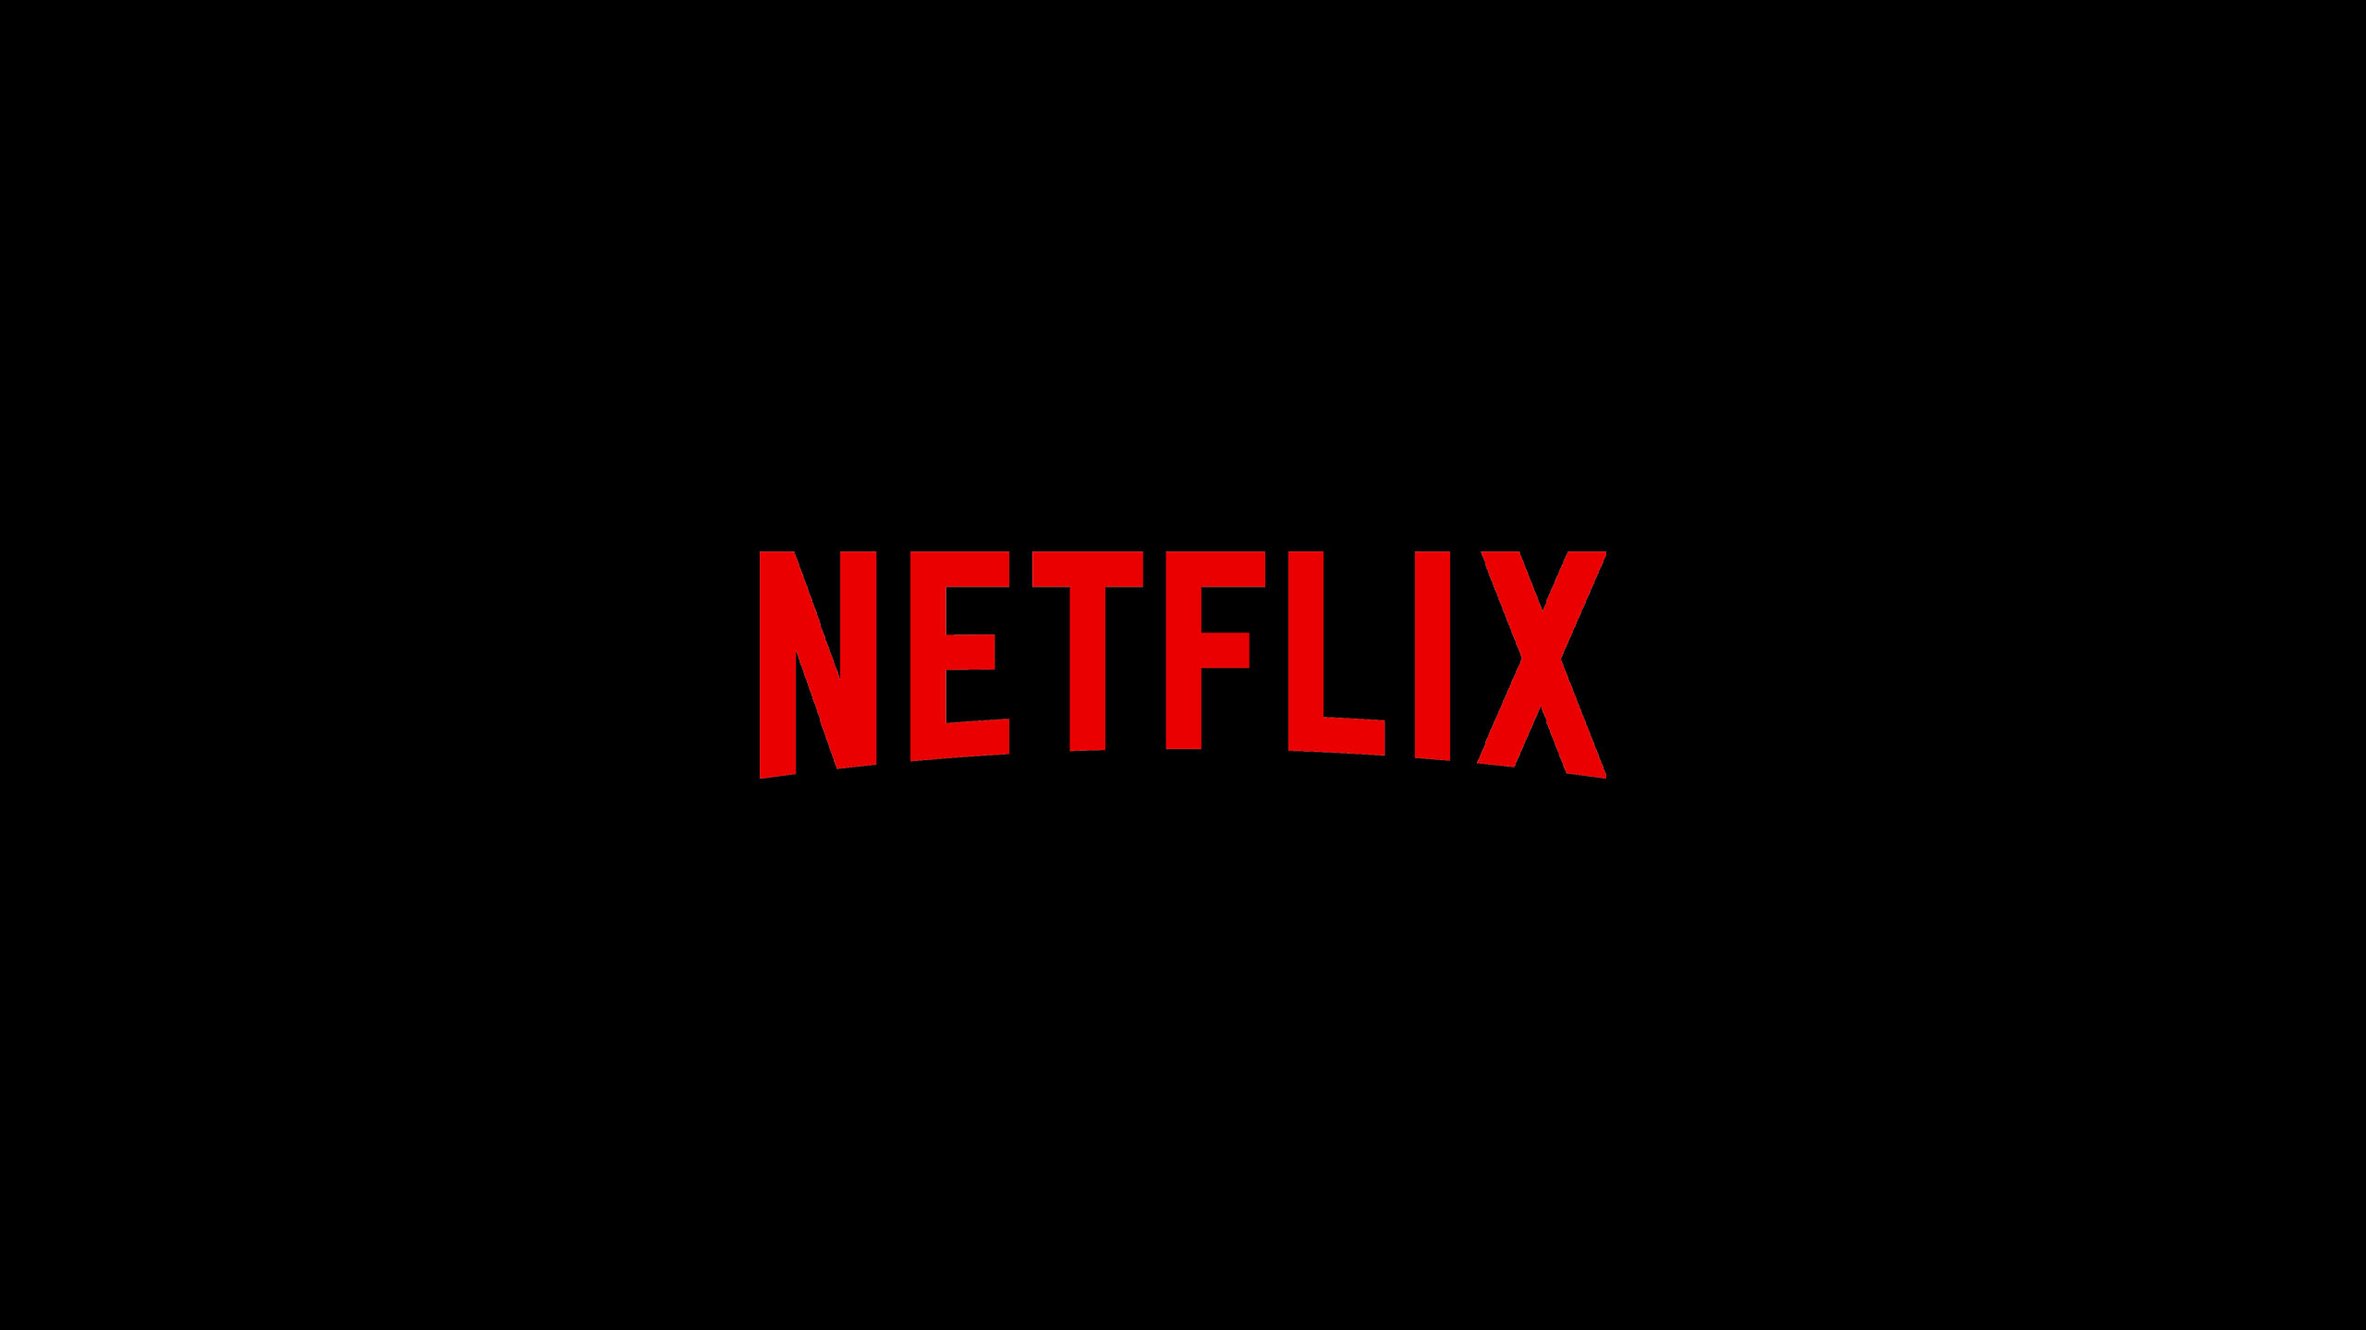 Netflix 'Plus/Minus' Featured Extra